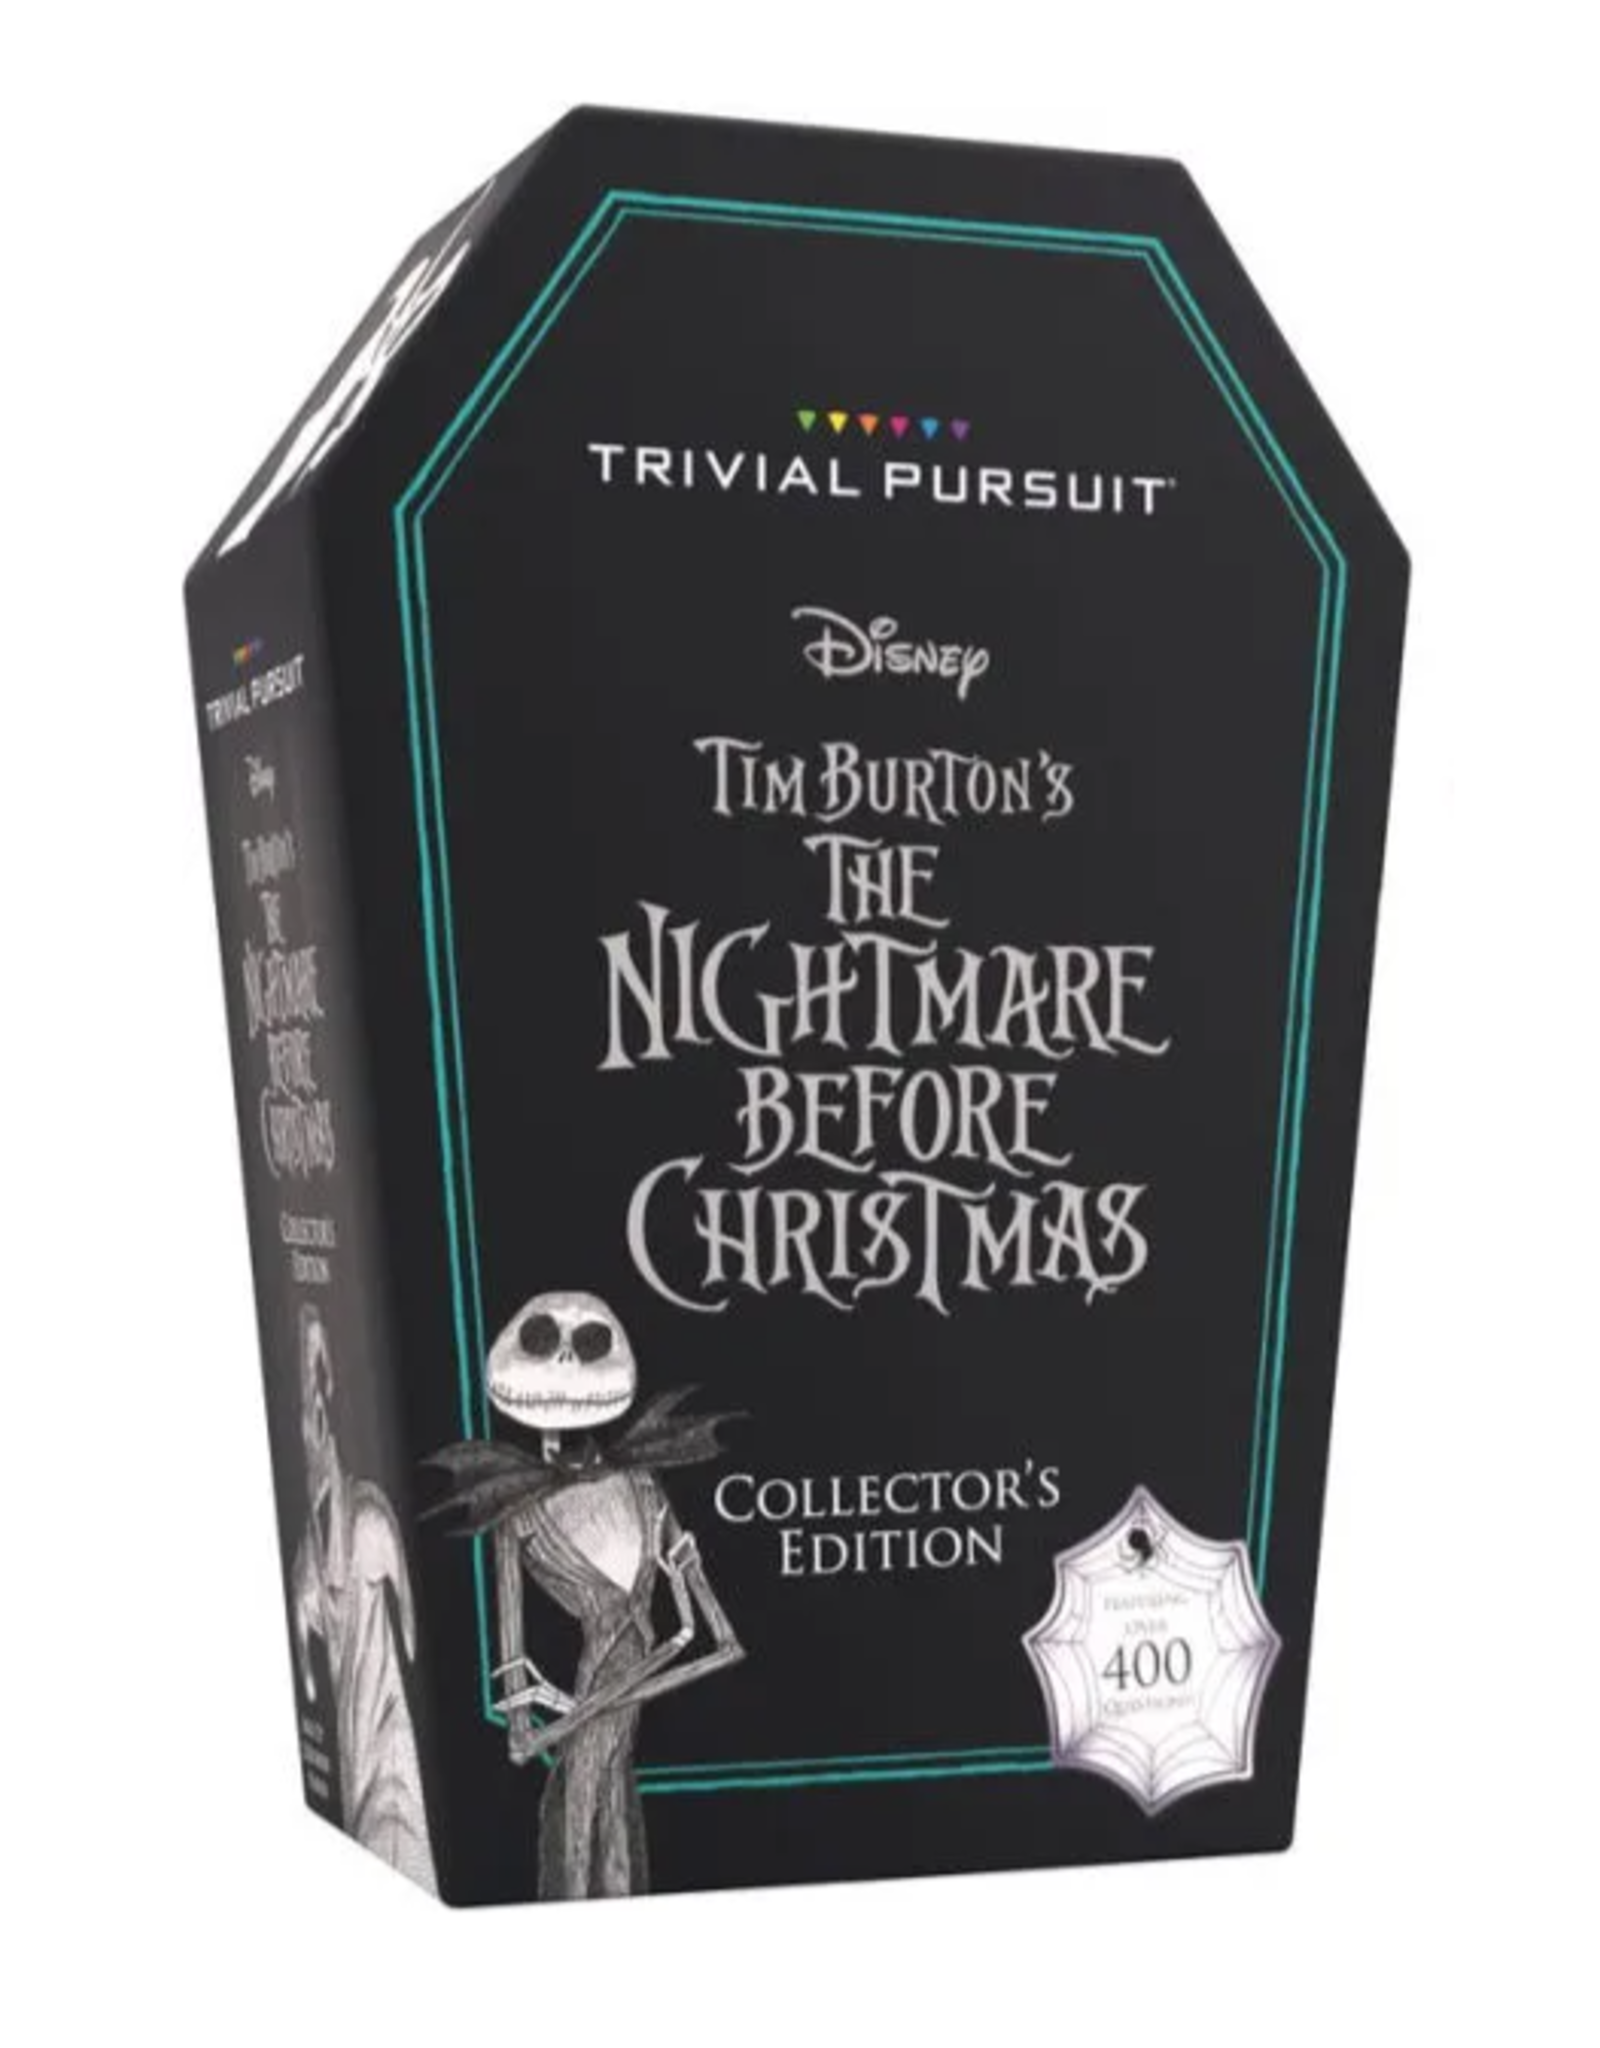 USAopoly Tim Burton's The Nightmare Before Christmas Trivial Pursuit